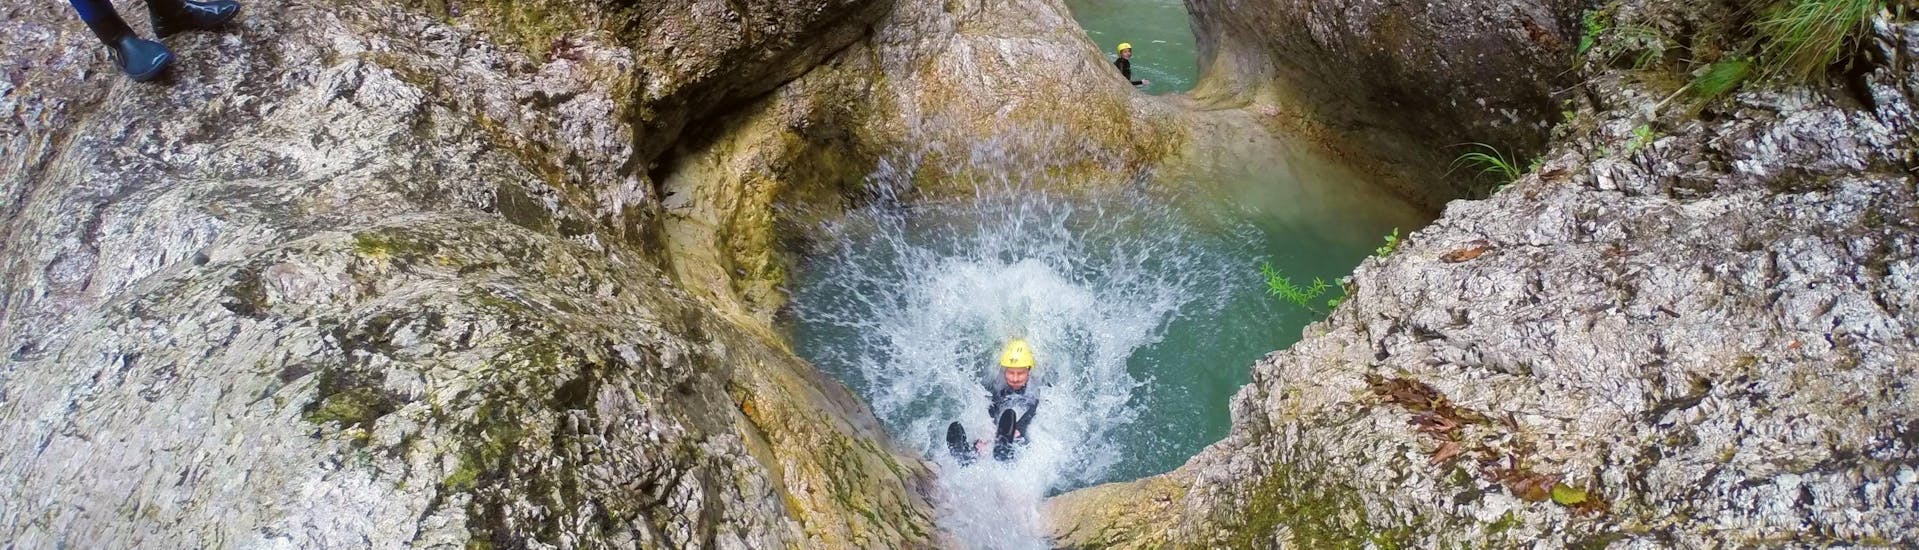 Canyoning nella gola Kozjak per avventurieri.